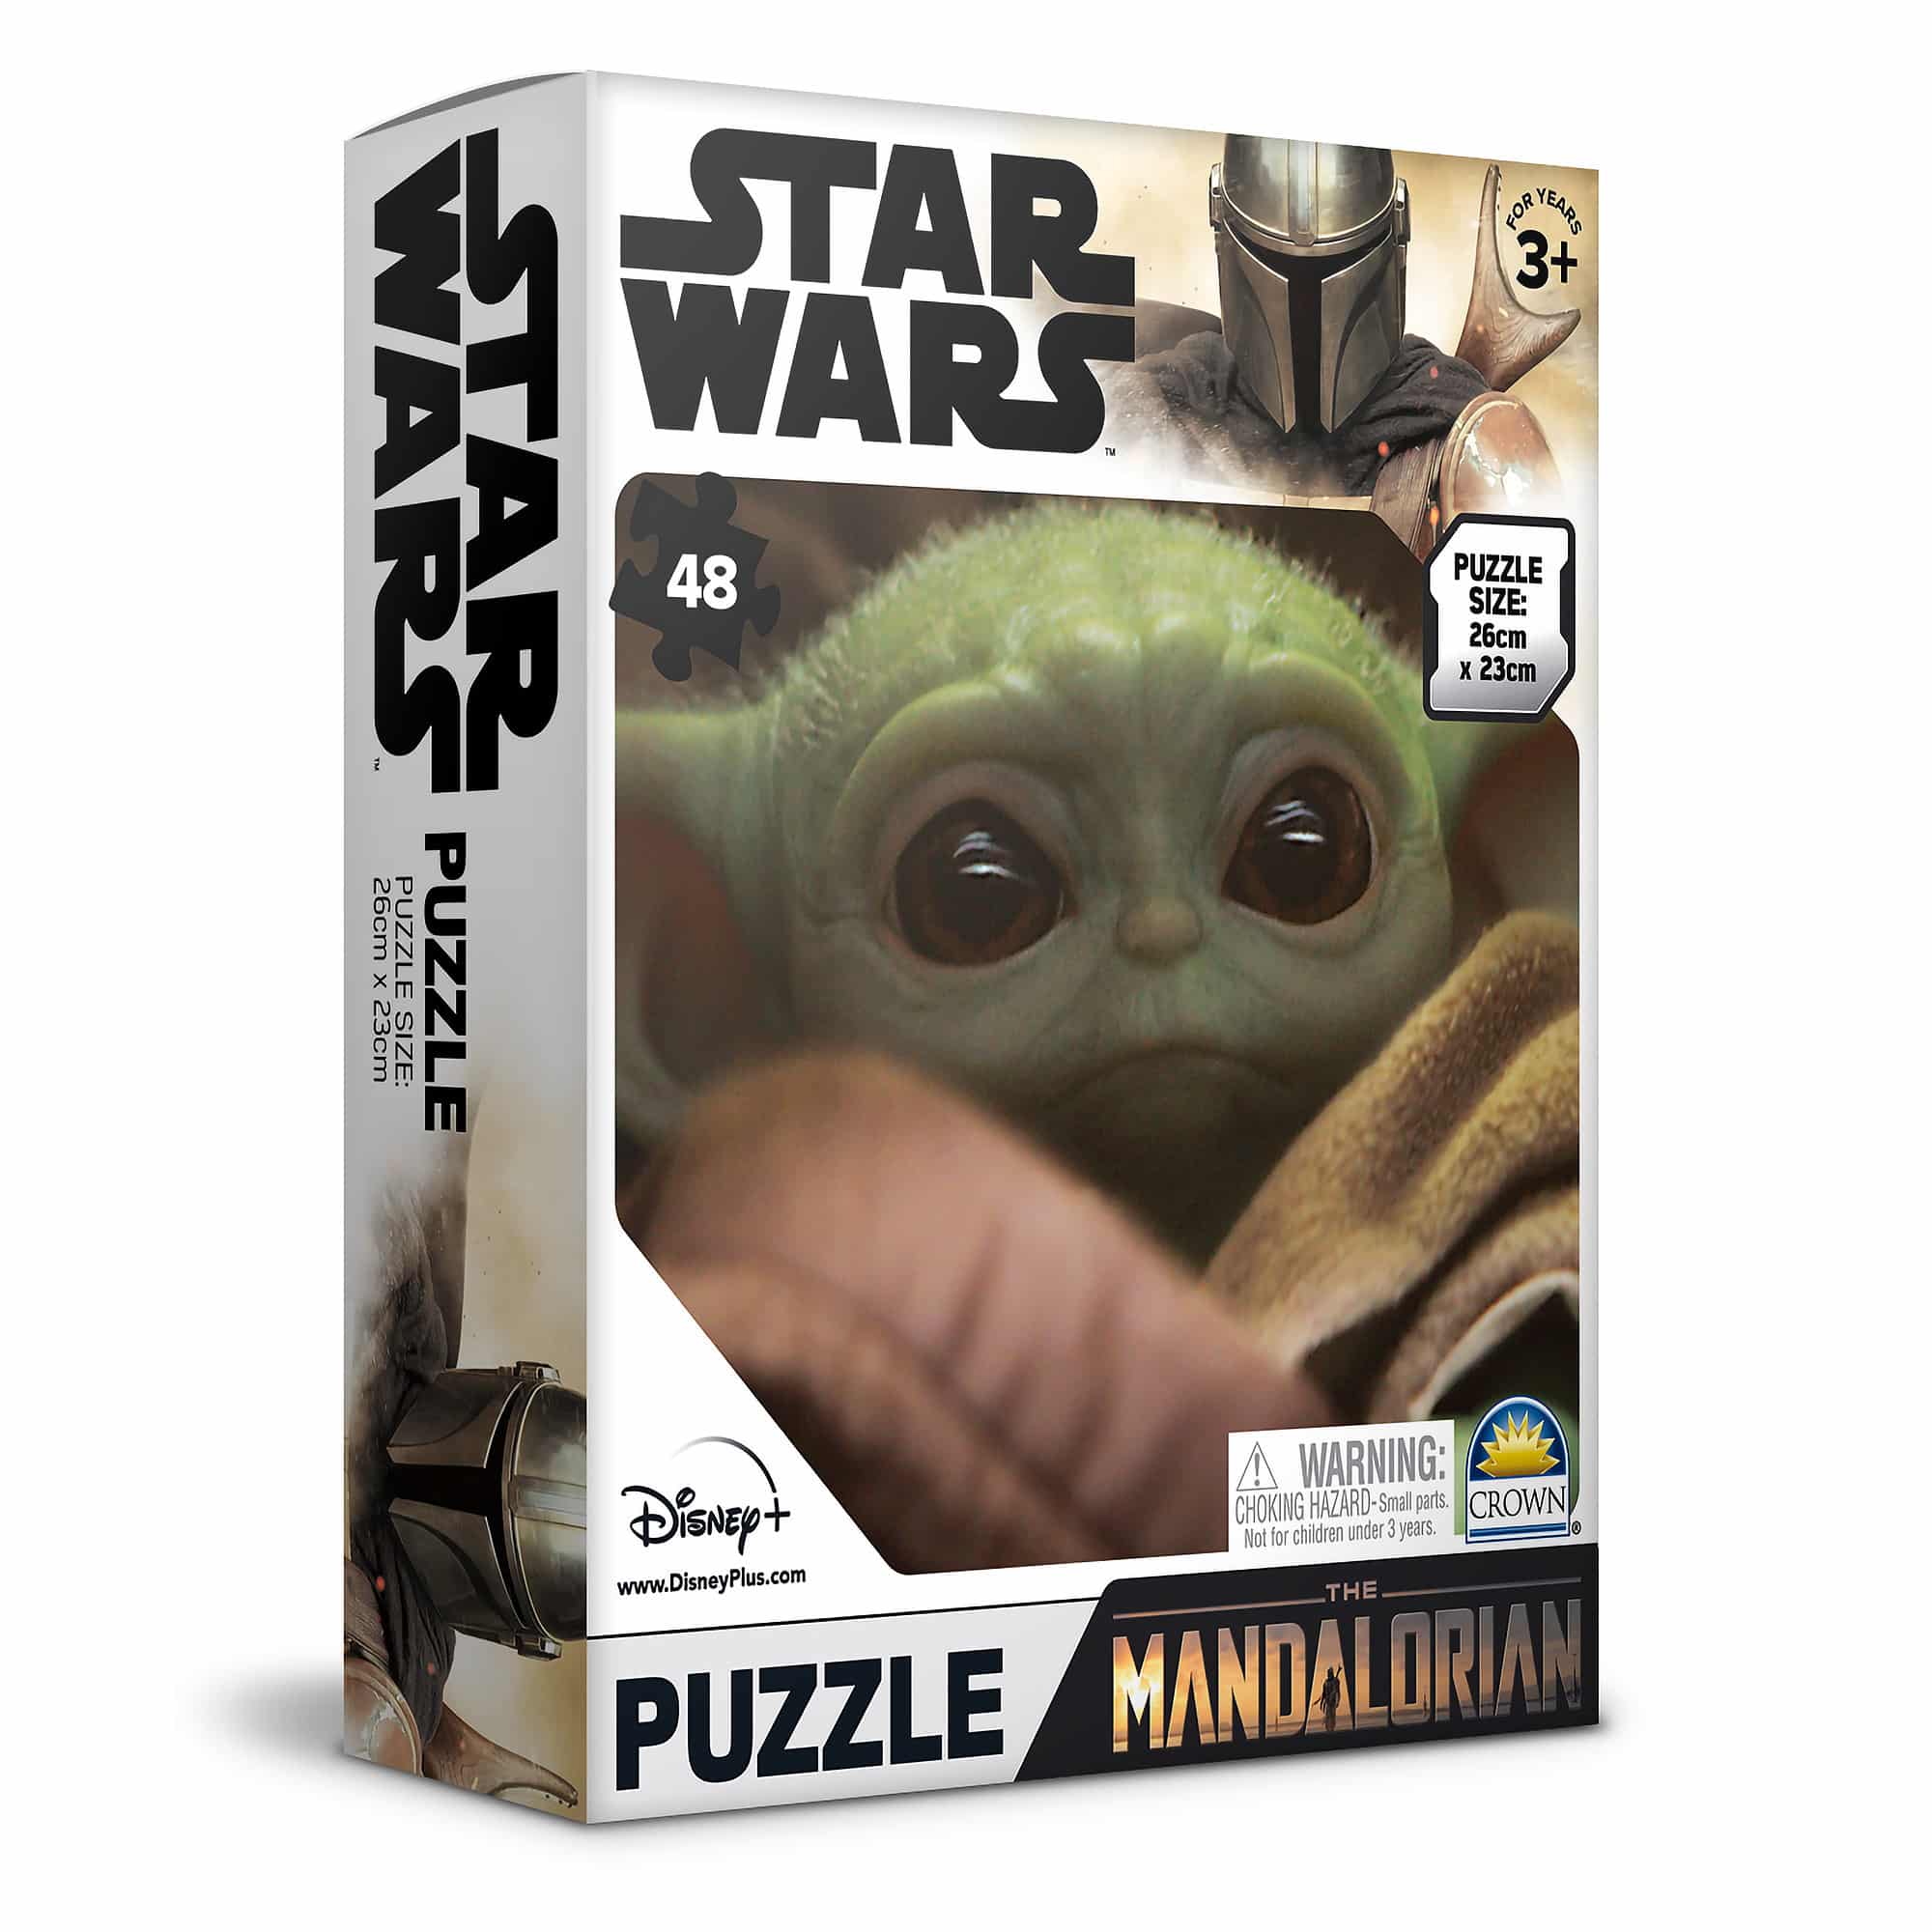 Star Wars - The Mandalorian - 48 Piece Puzzle Assortment